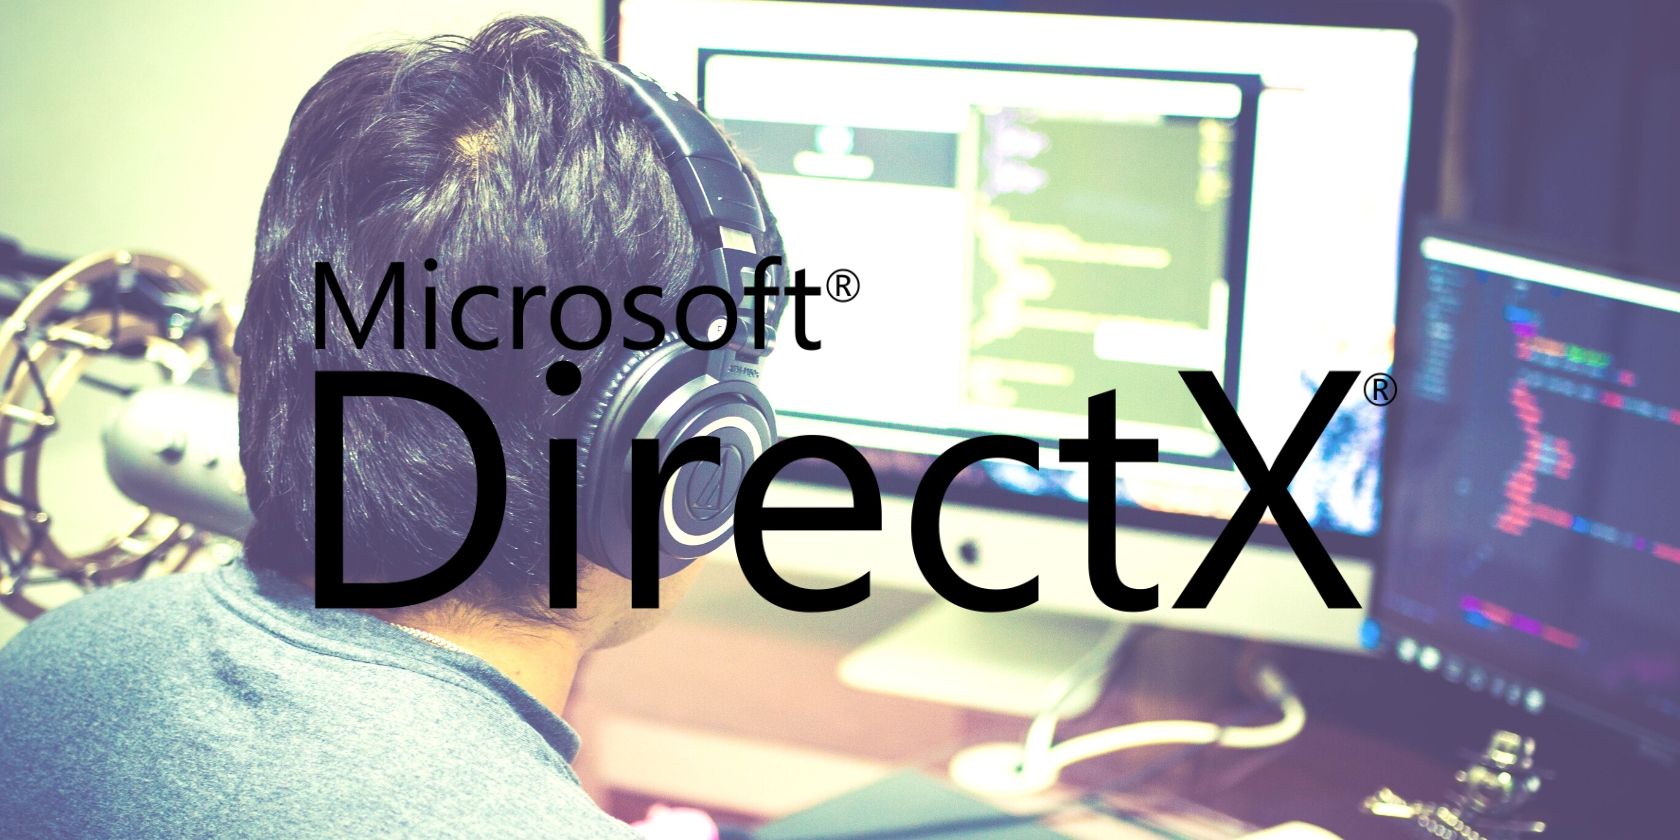 DirectX 標誌強加在一個人編碼的照片上